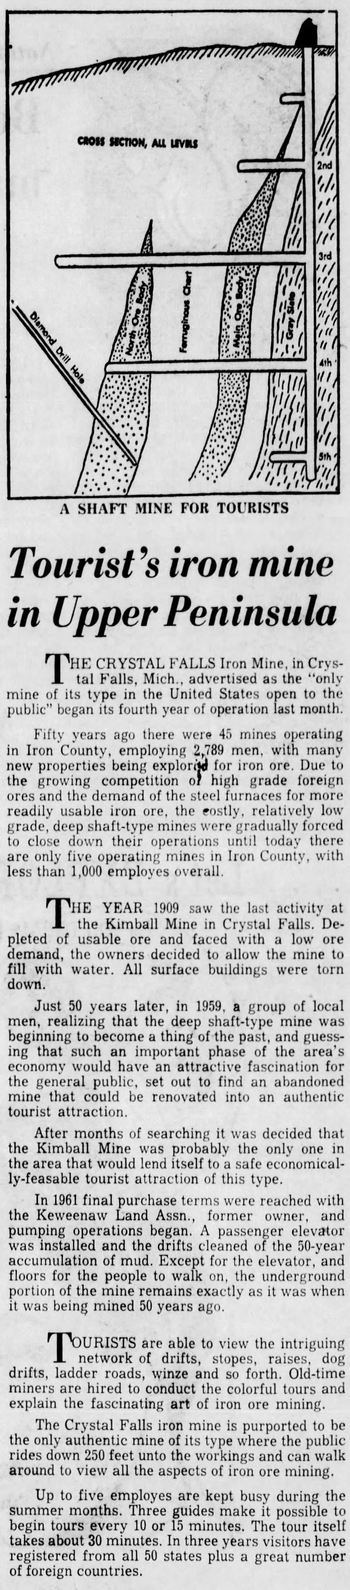 Crystal Falls Iron Mine - Jun 2 1963 Article